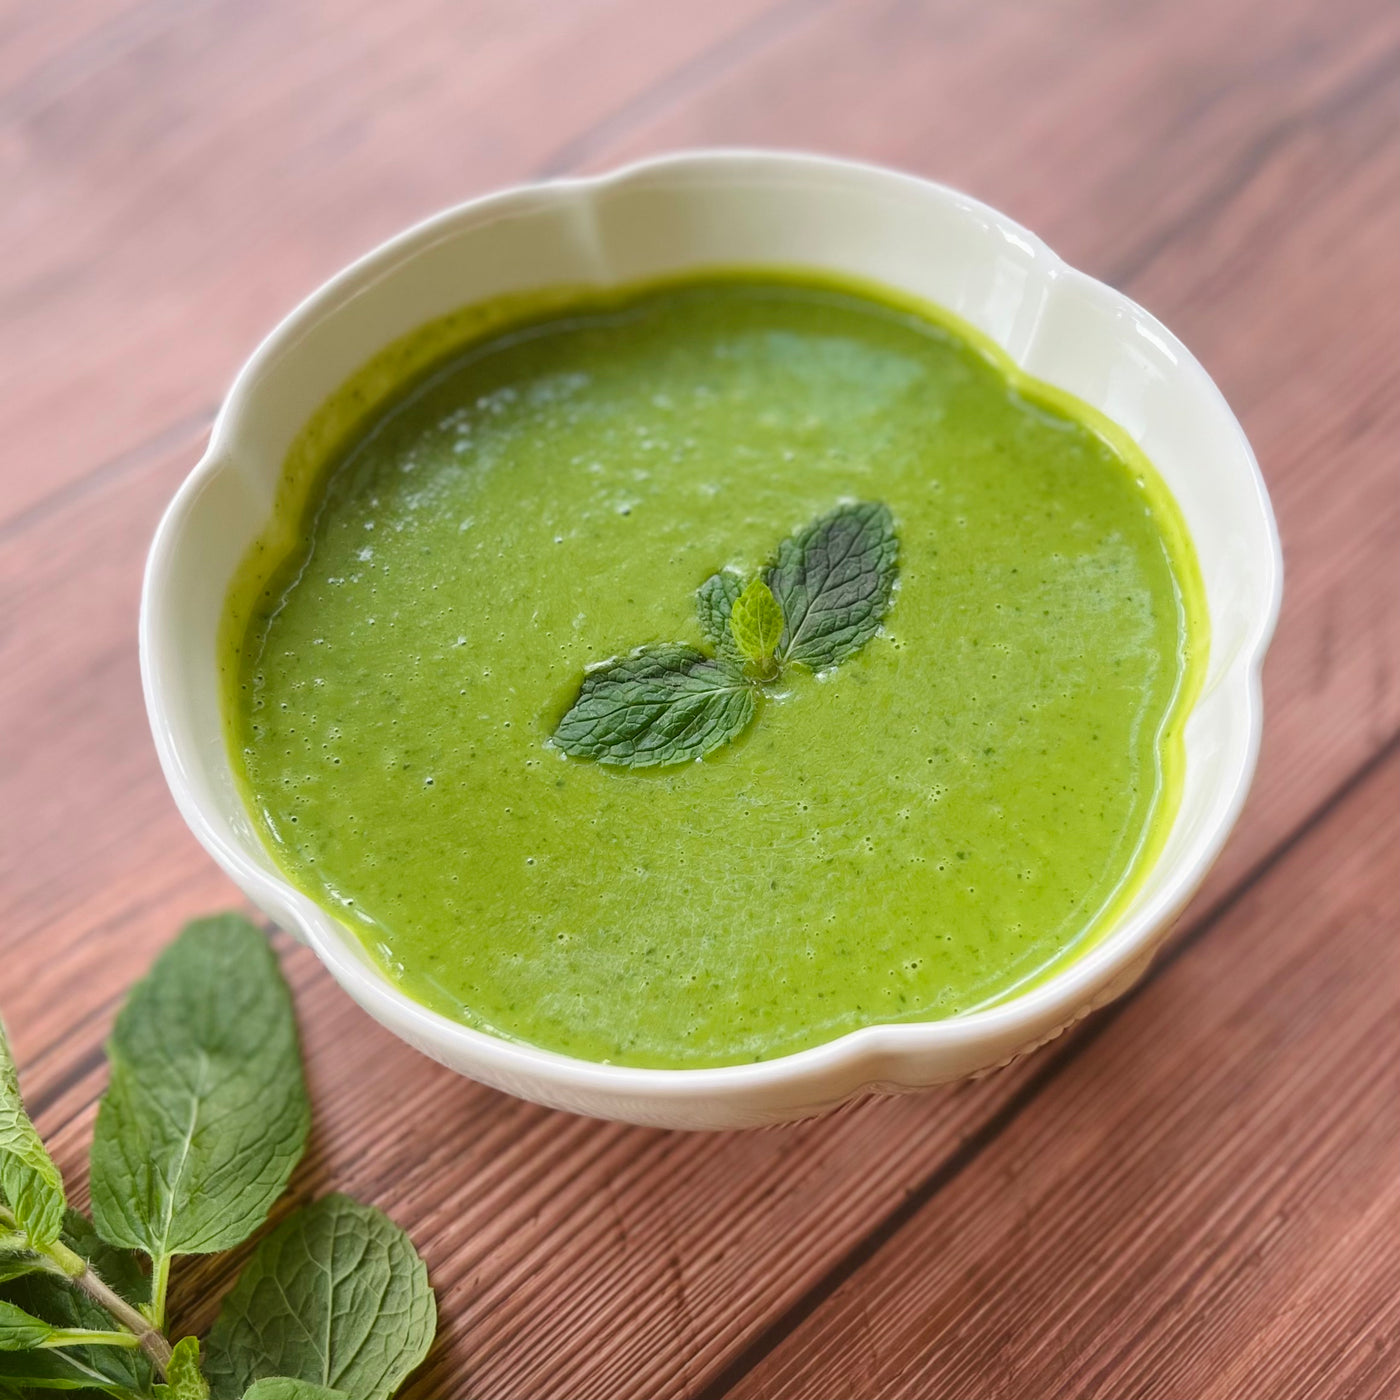 Artisanal Green Peas & Mint Soup | +/-250g